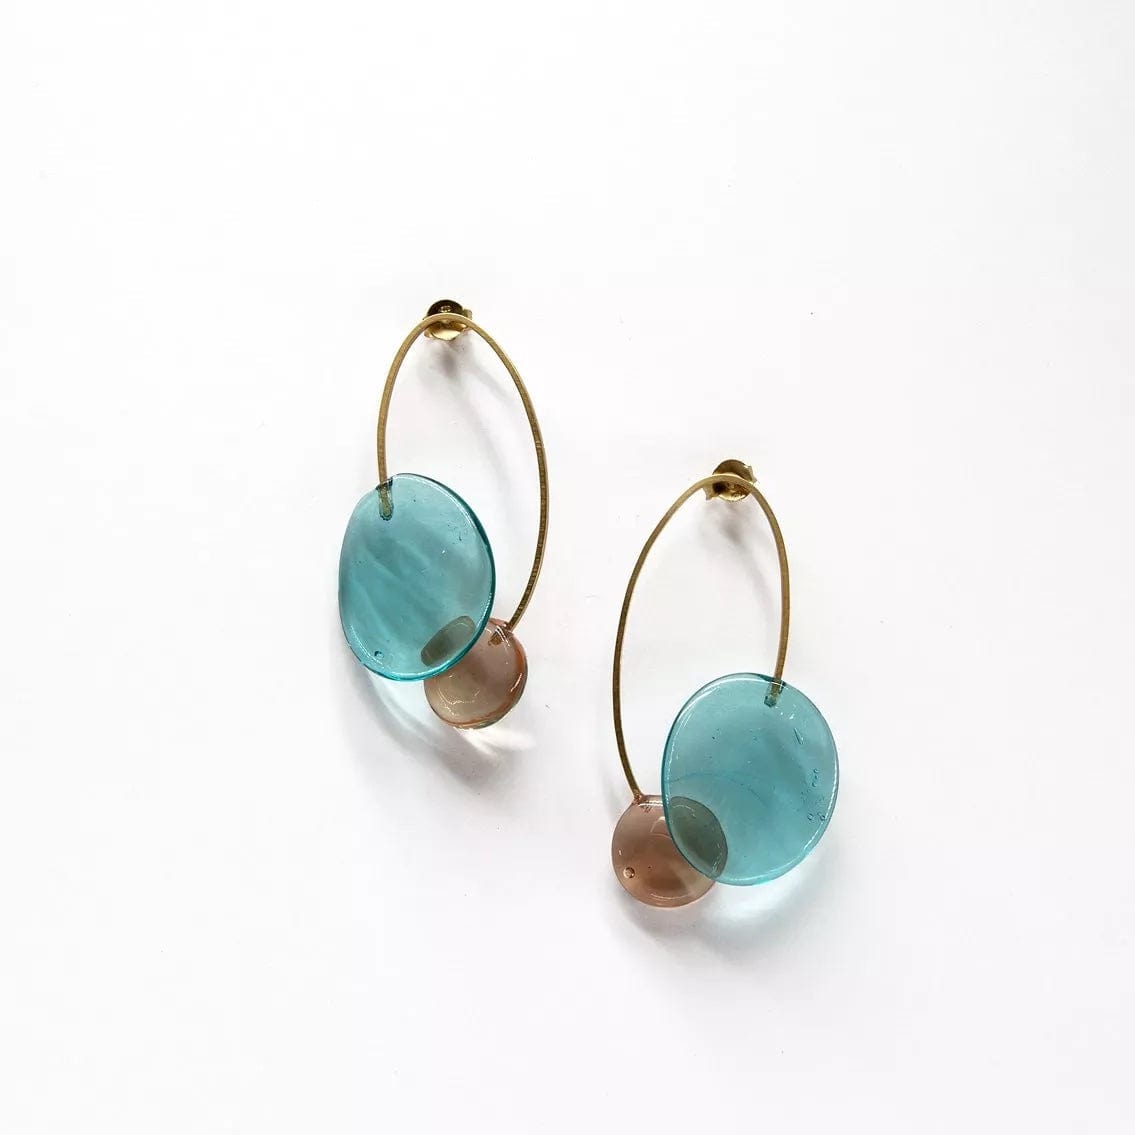 Elia earrings with Murano glass - Premium Earrings - Shop now at San Rocco Italia